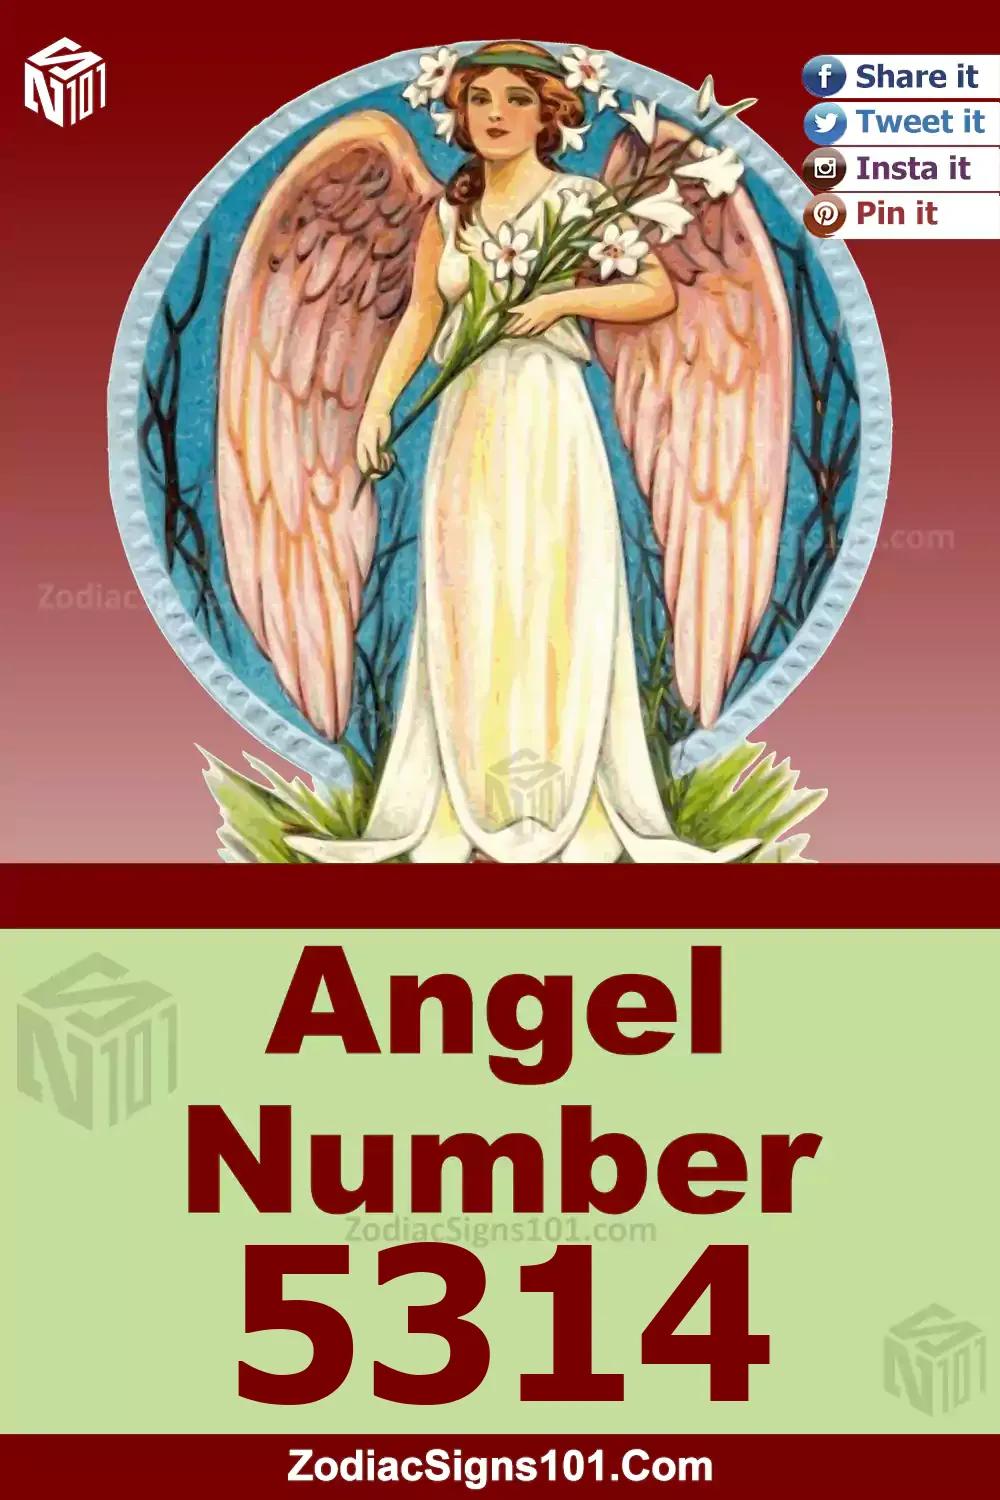 5314-Angel-Number-Meaning.jpg